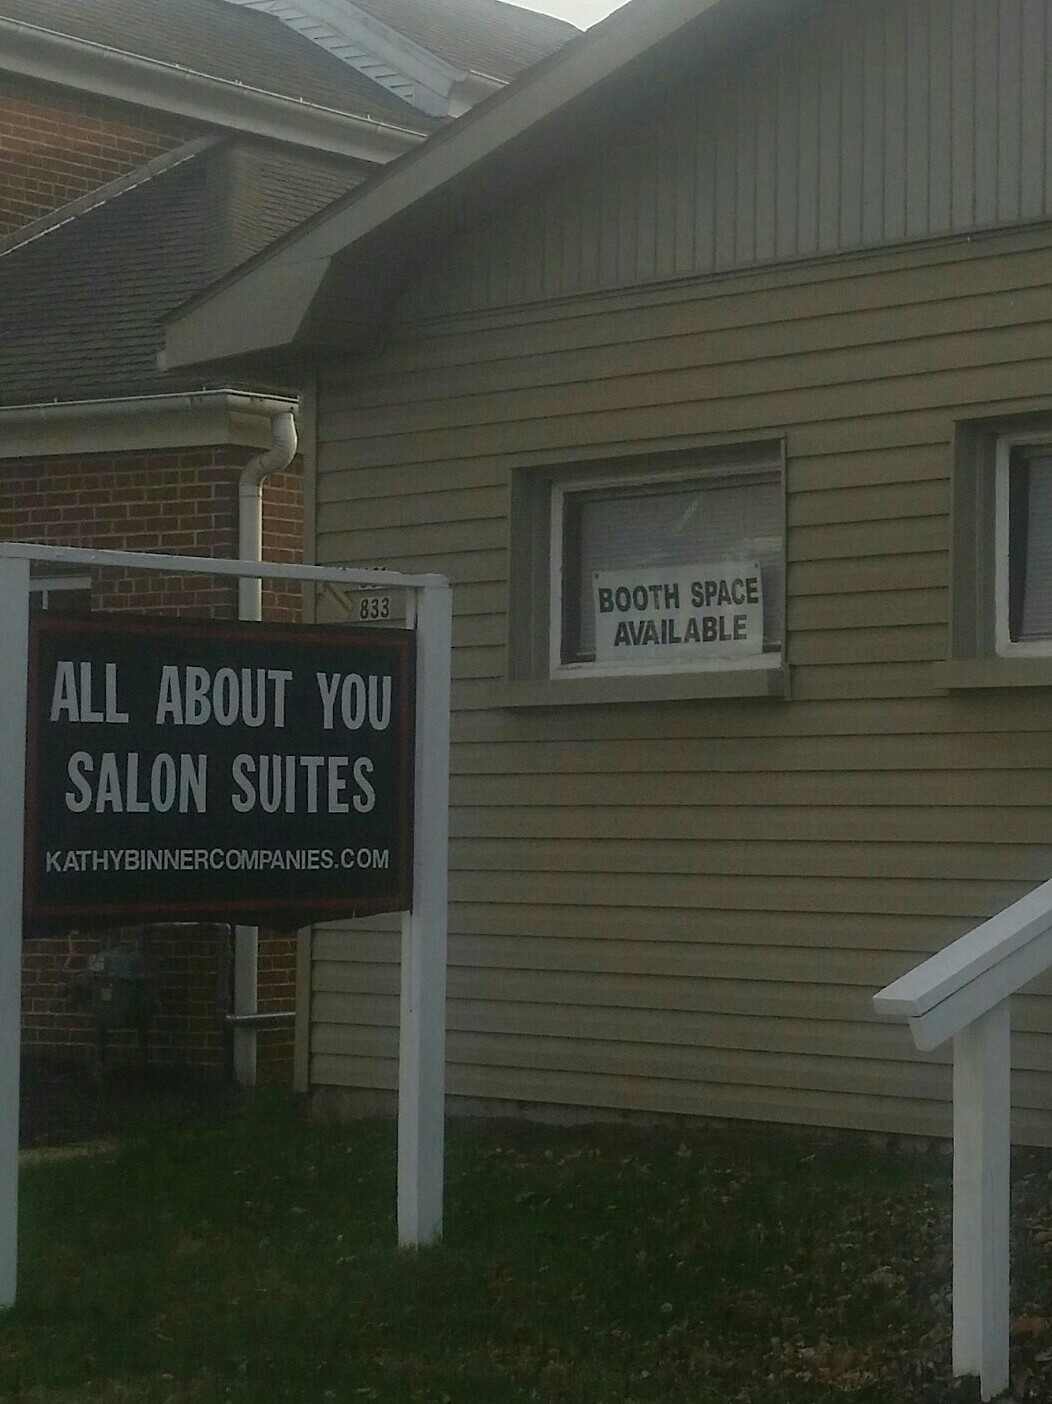 All About You Salon Suites